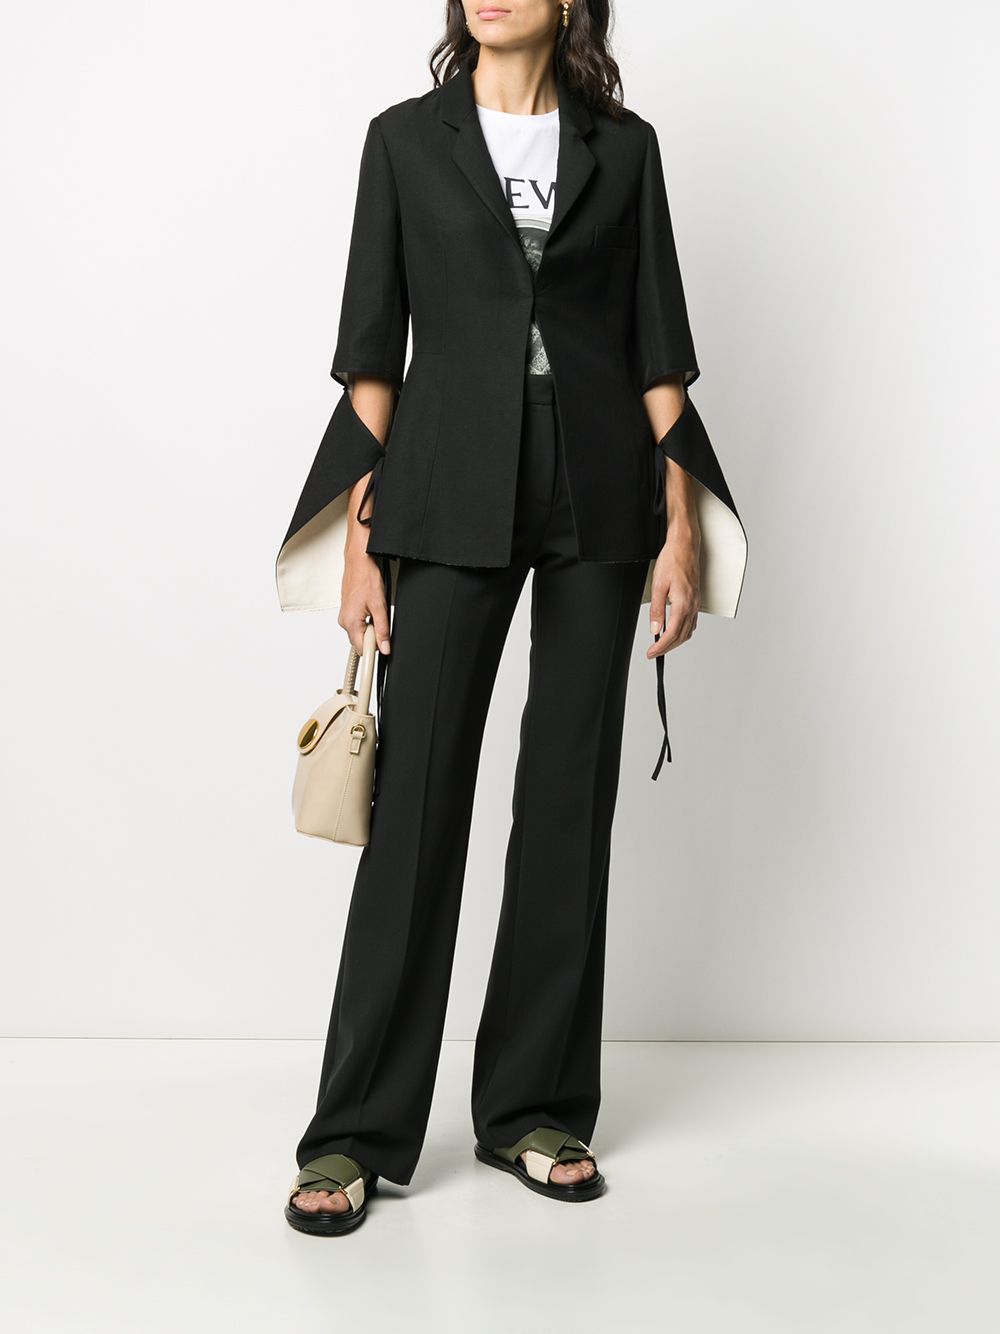 Shop black LOEWE cutout blazer with Express Delivery - Farfetch